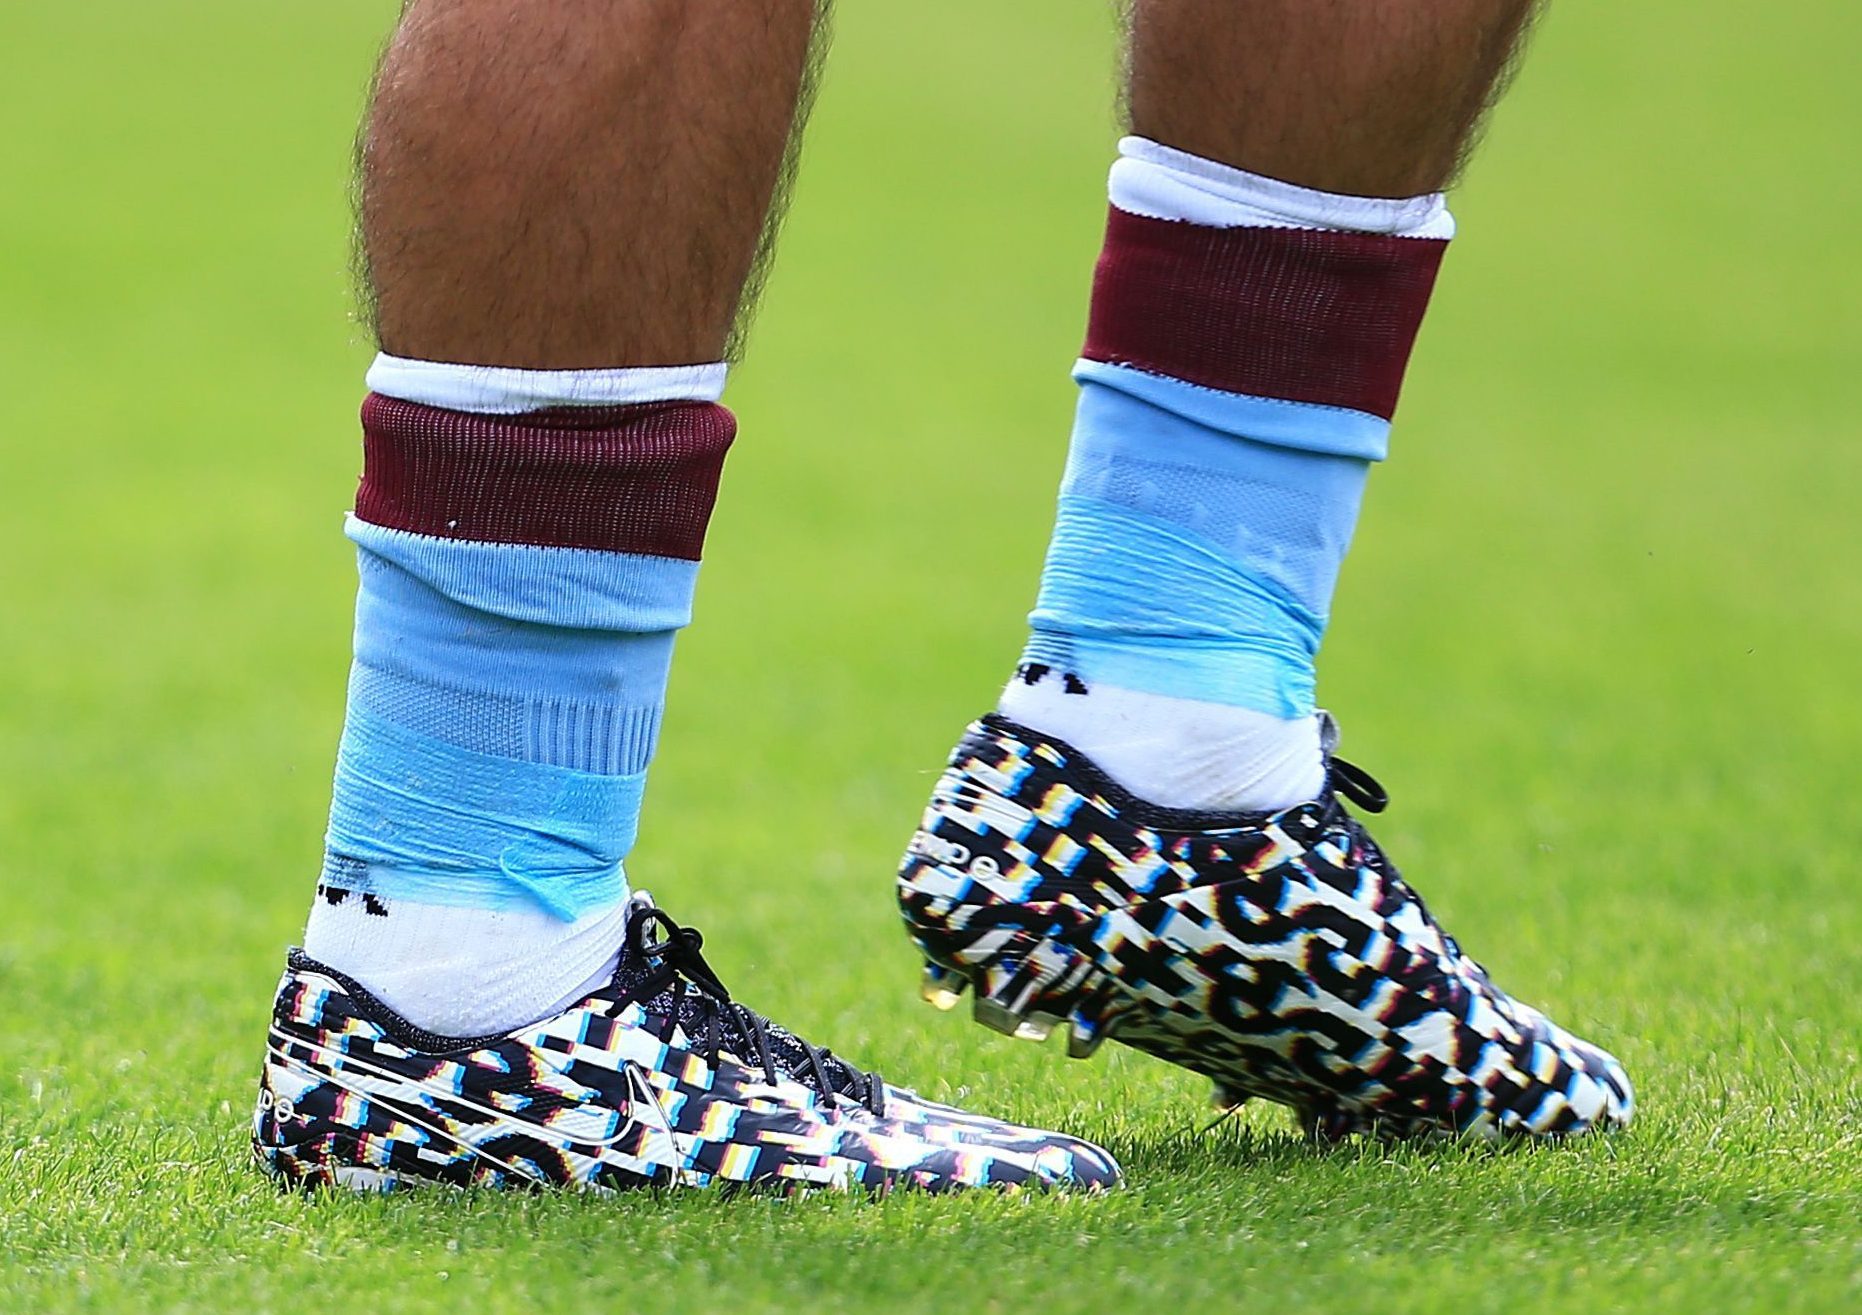 The story behind Jack Grealish's small socks | FootballTalk.org